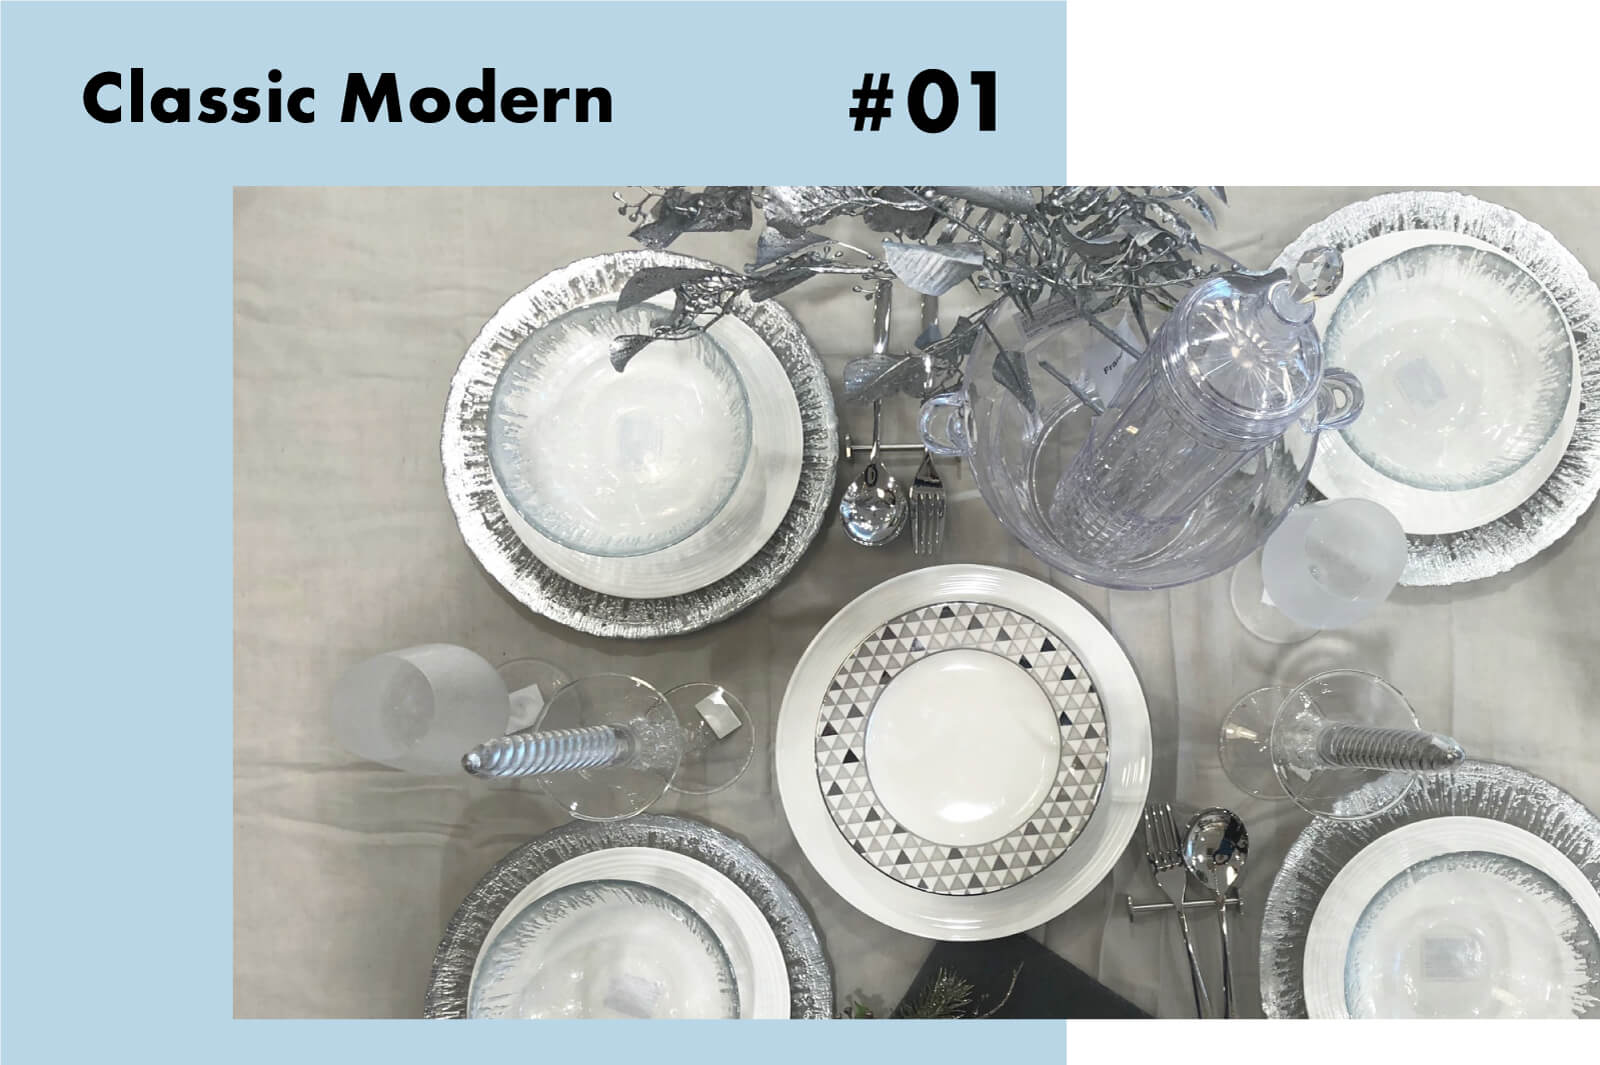 #01 Classic Modern